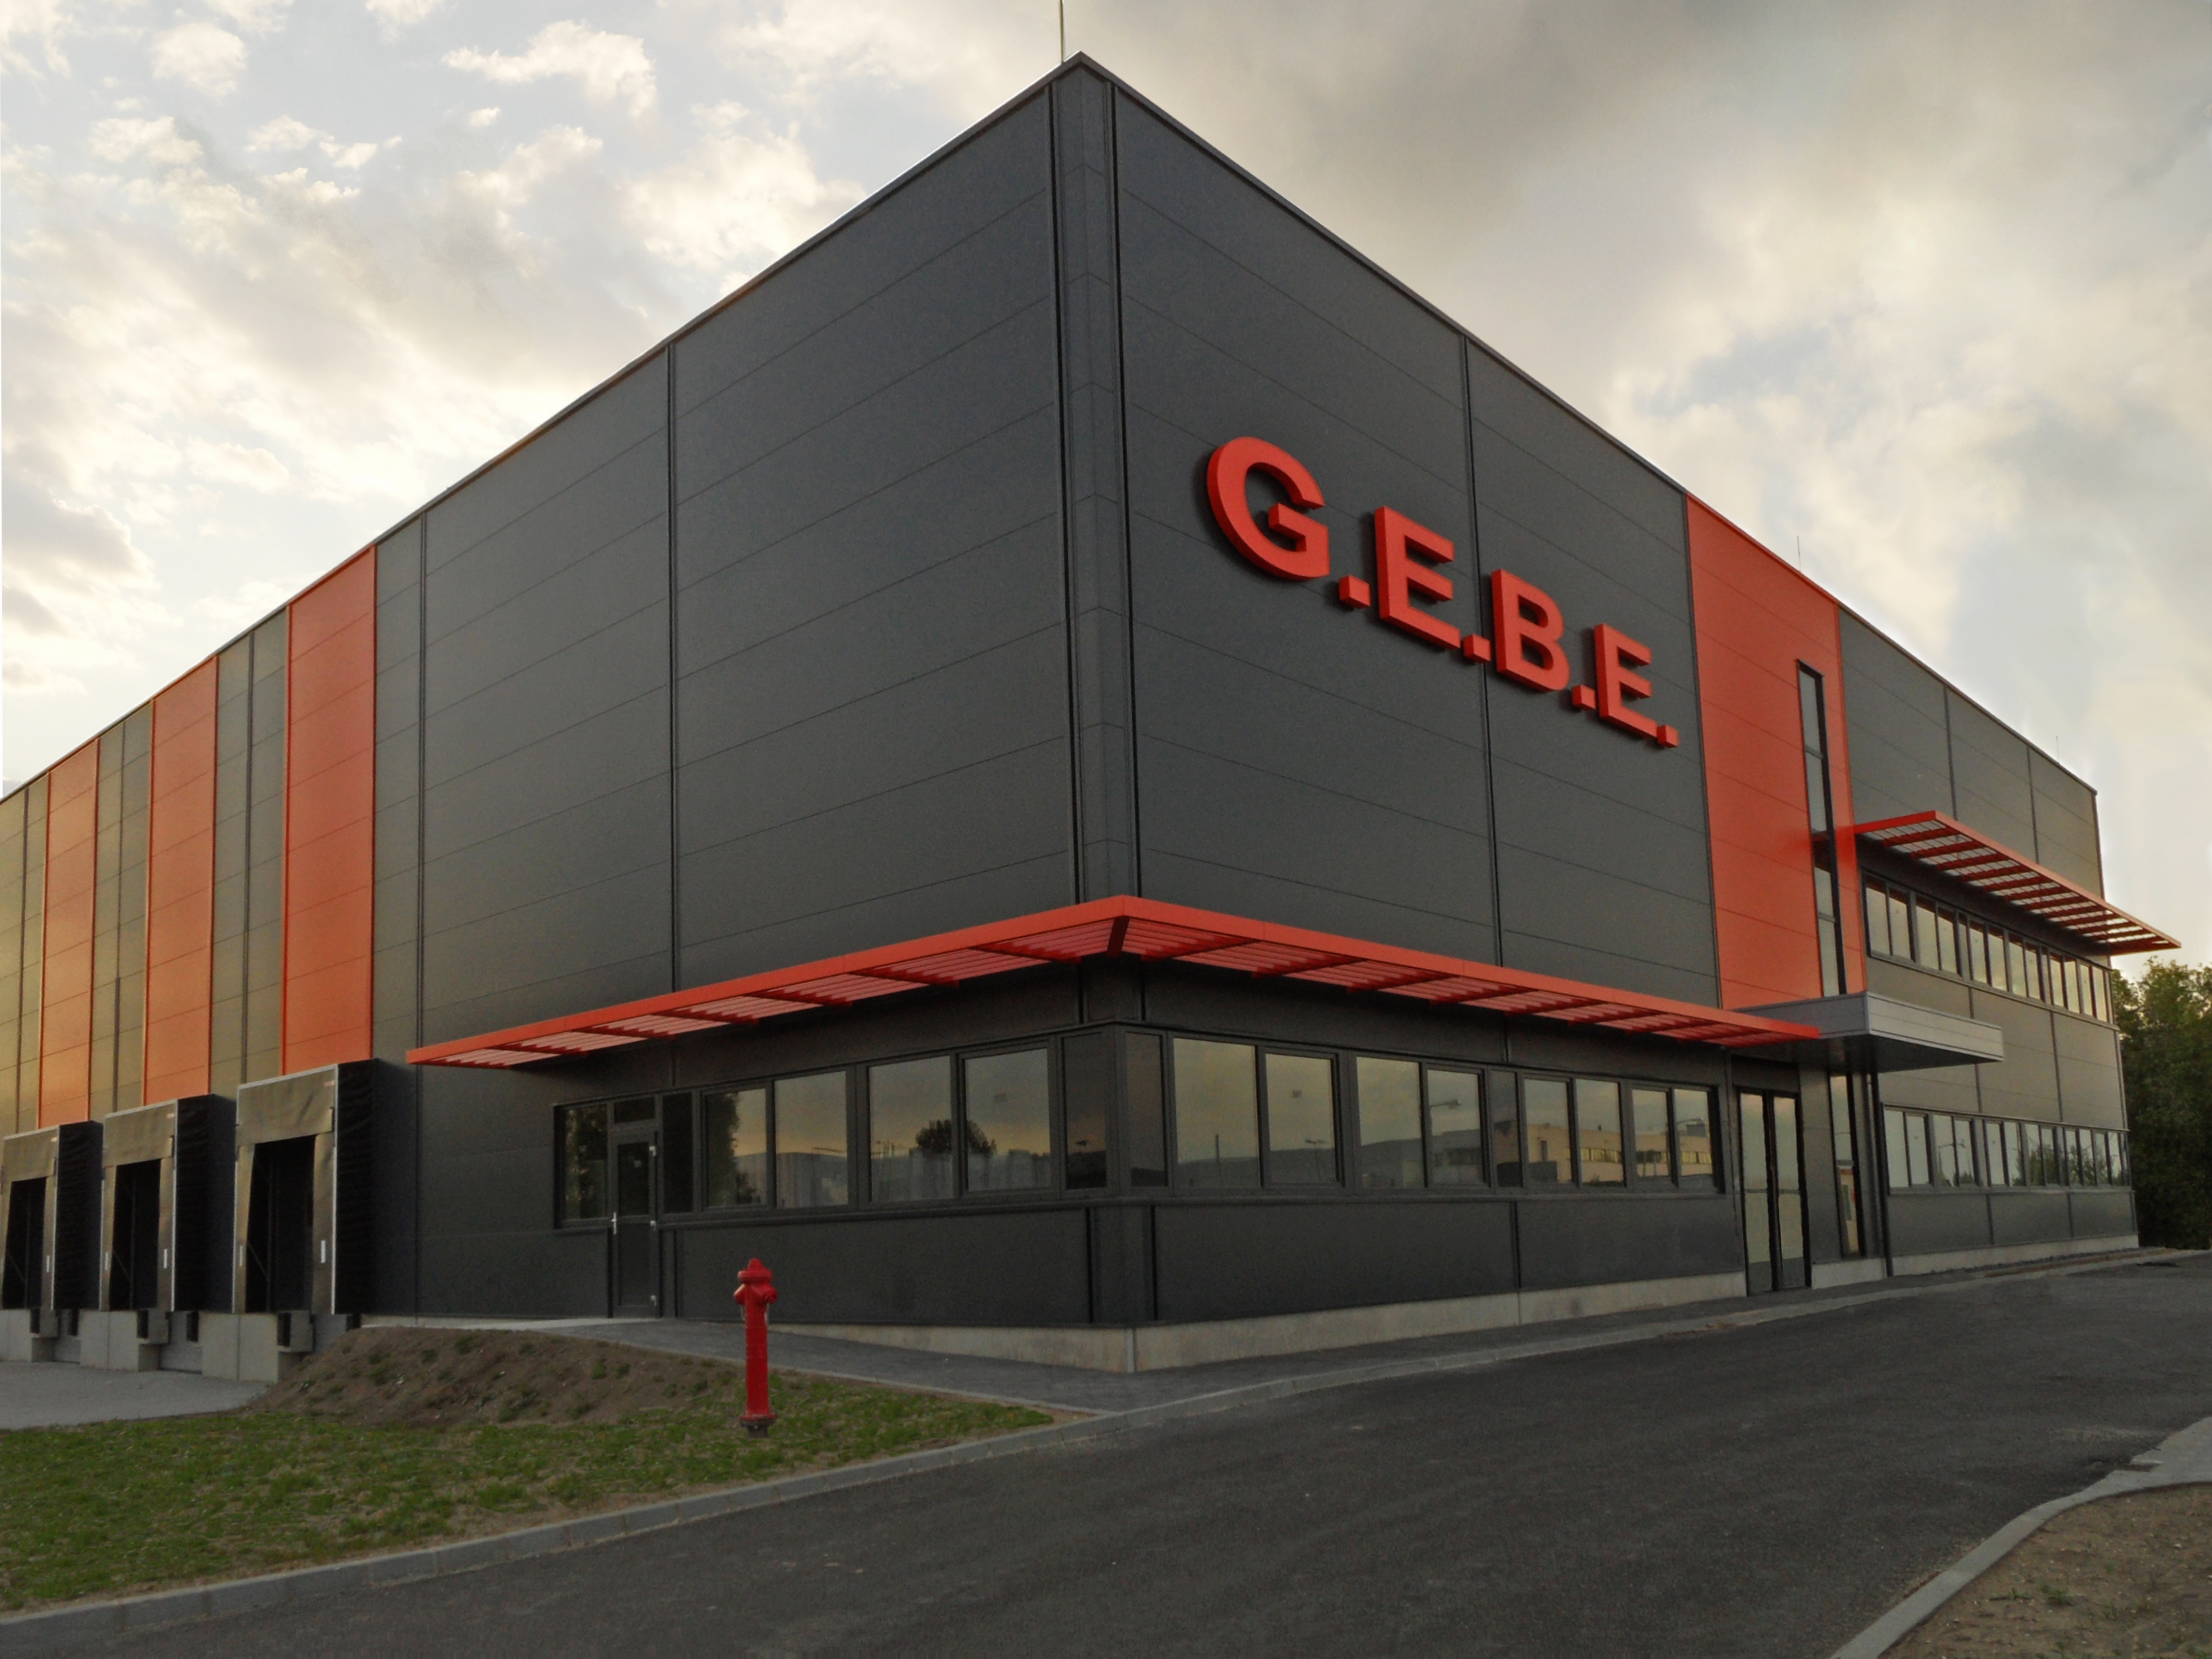 G.E.B.E Ltd. Office and Logistic Centre